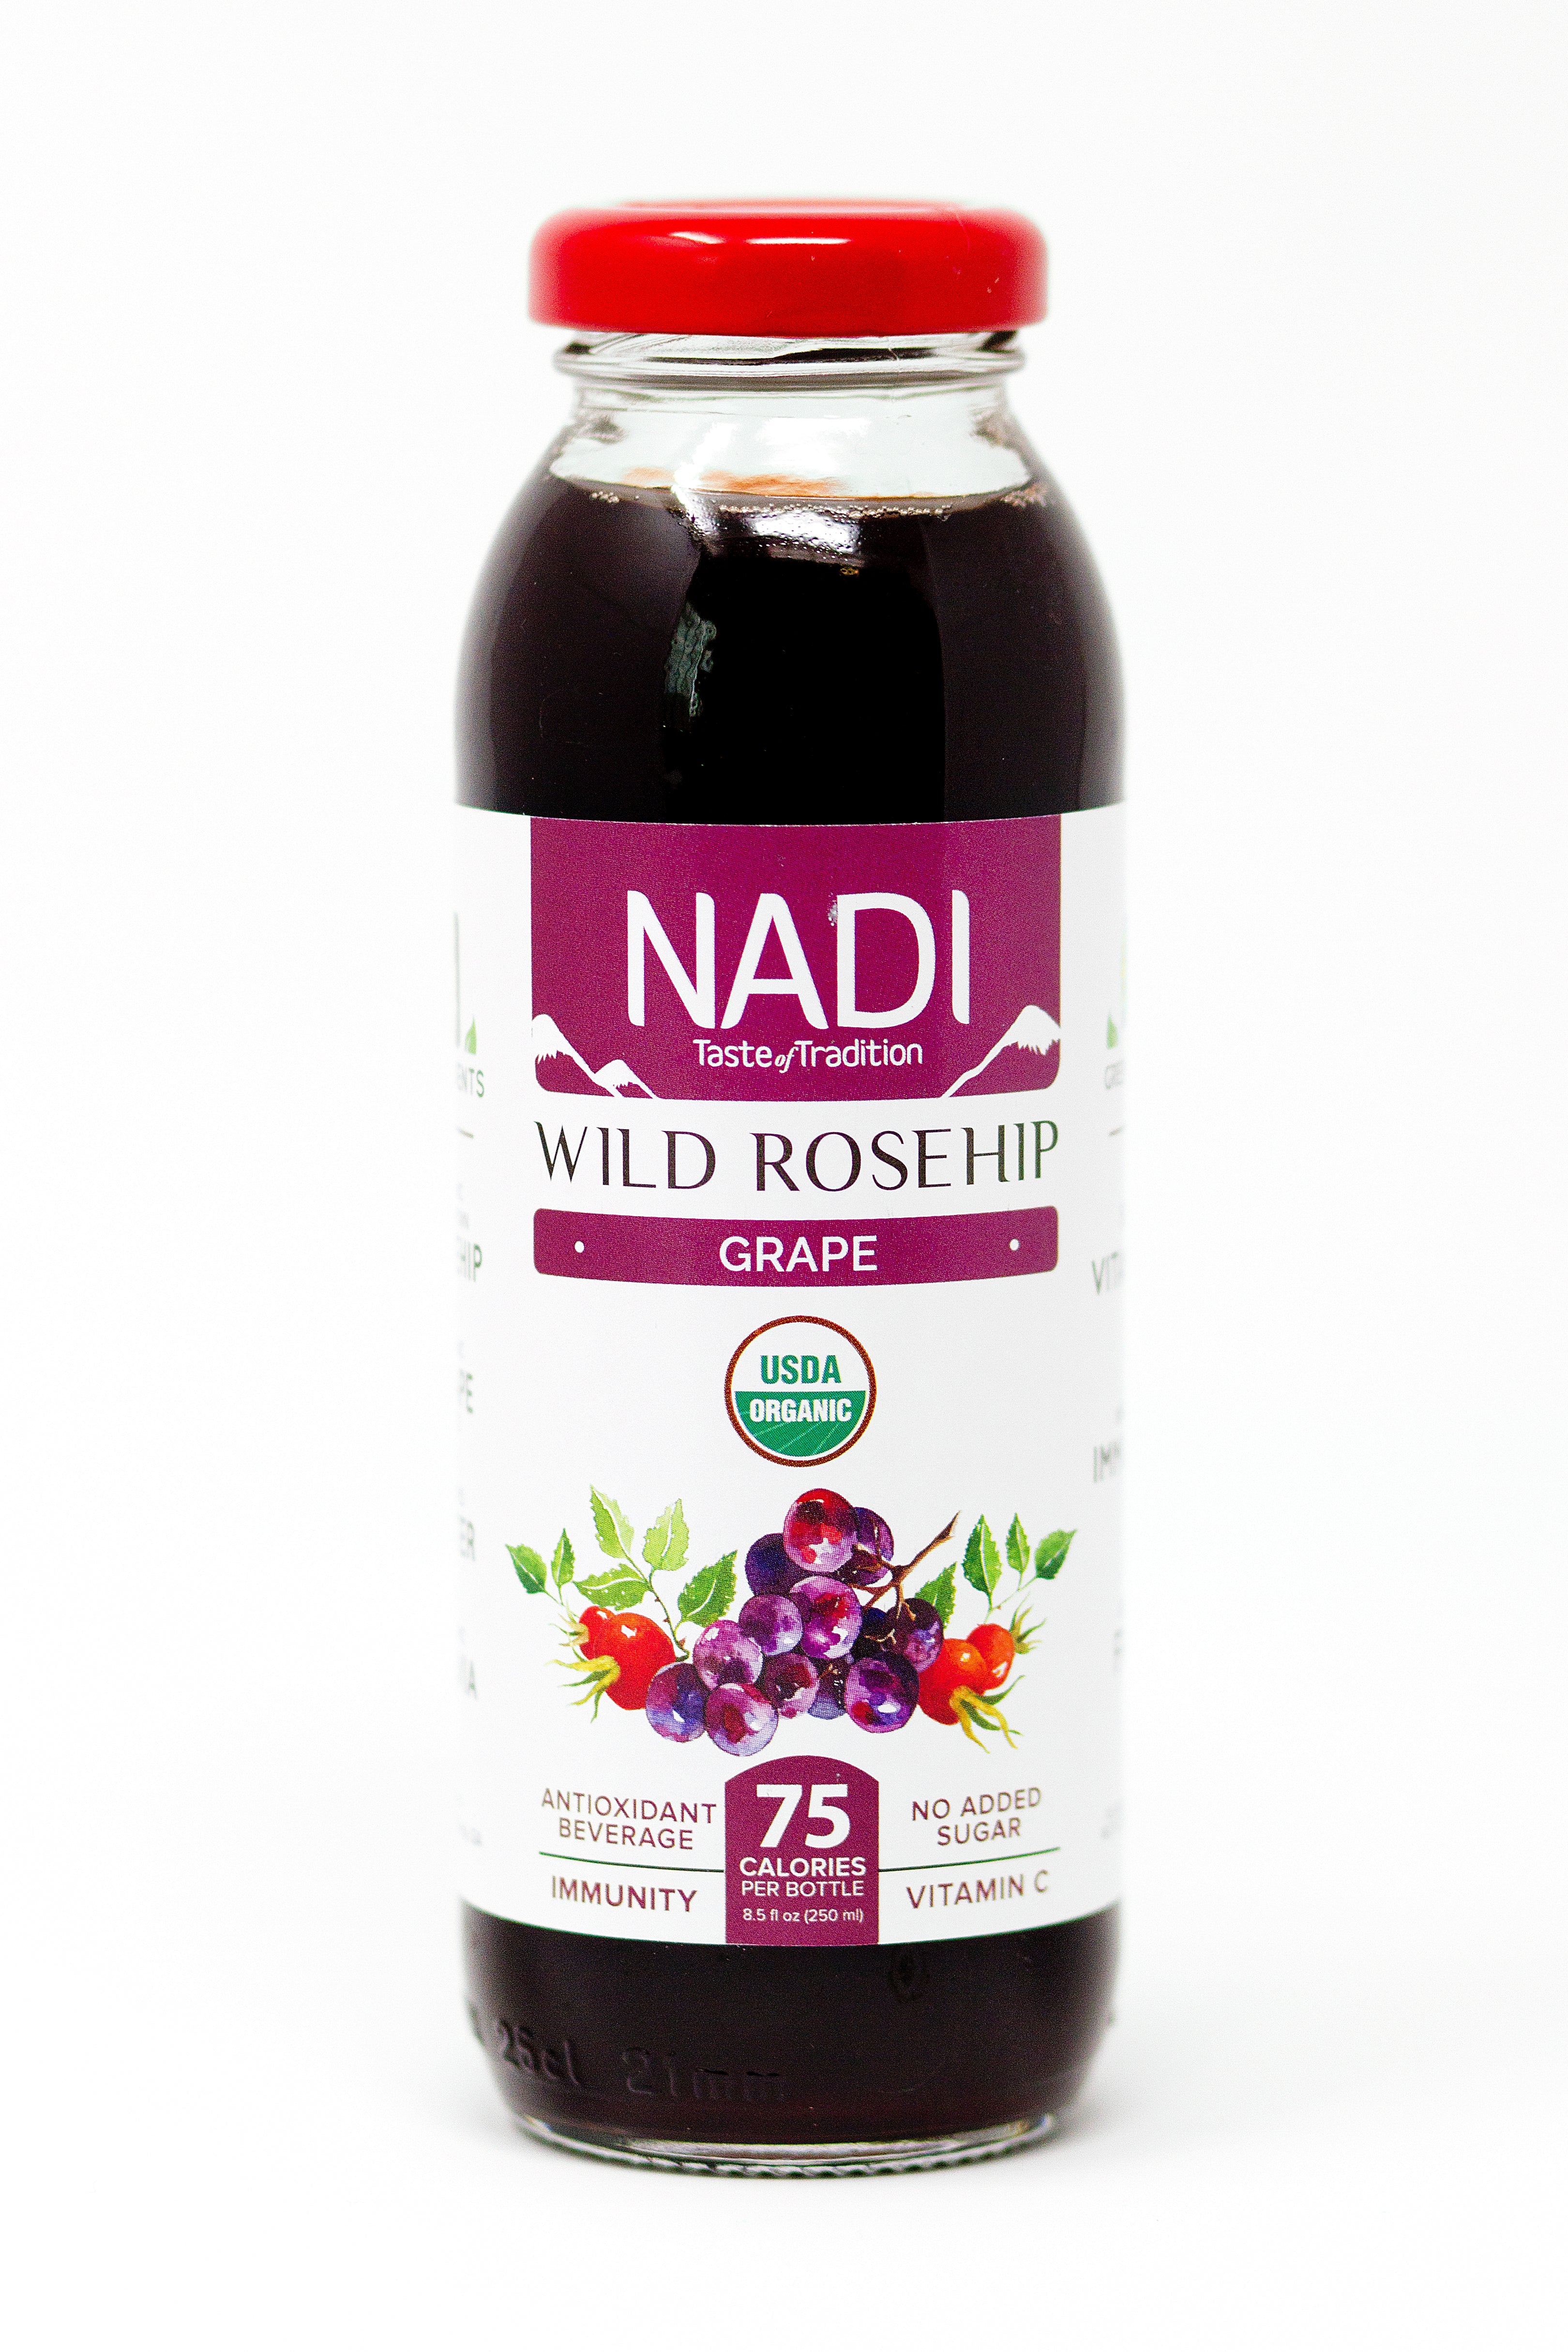 NADI Wild Rosehip Grape High in vitamin C Juice Drink bottle 